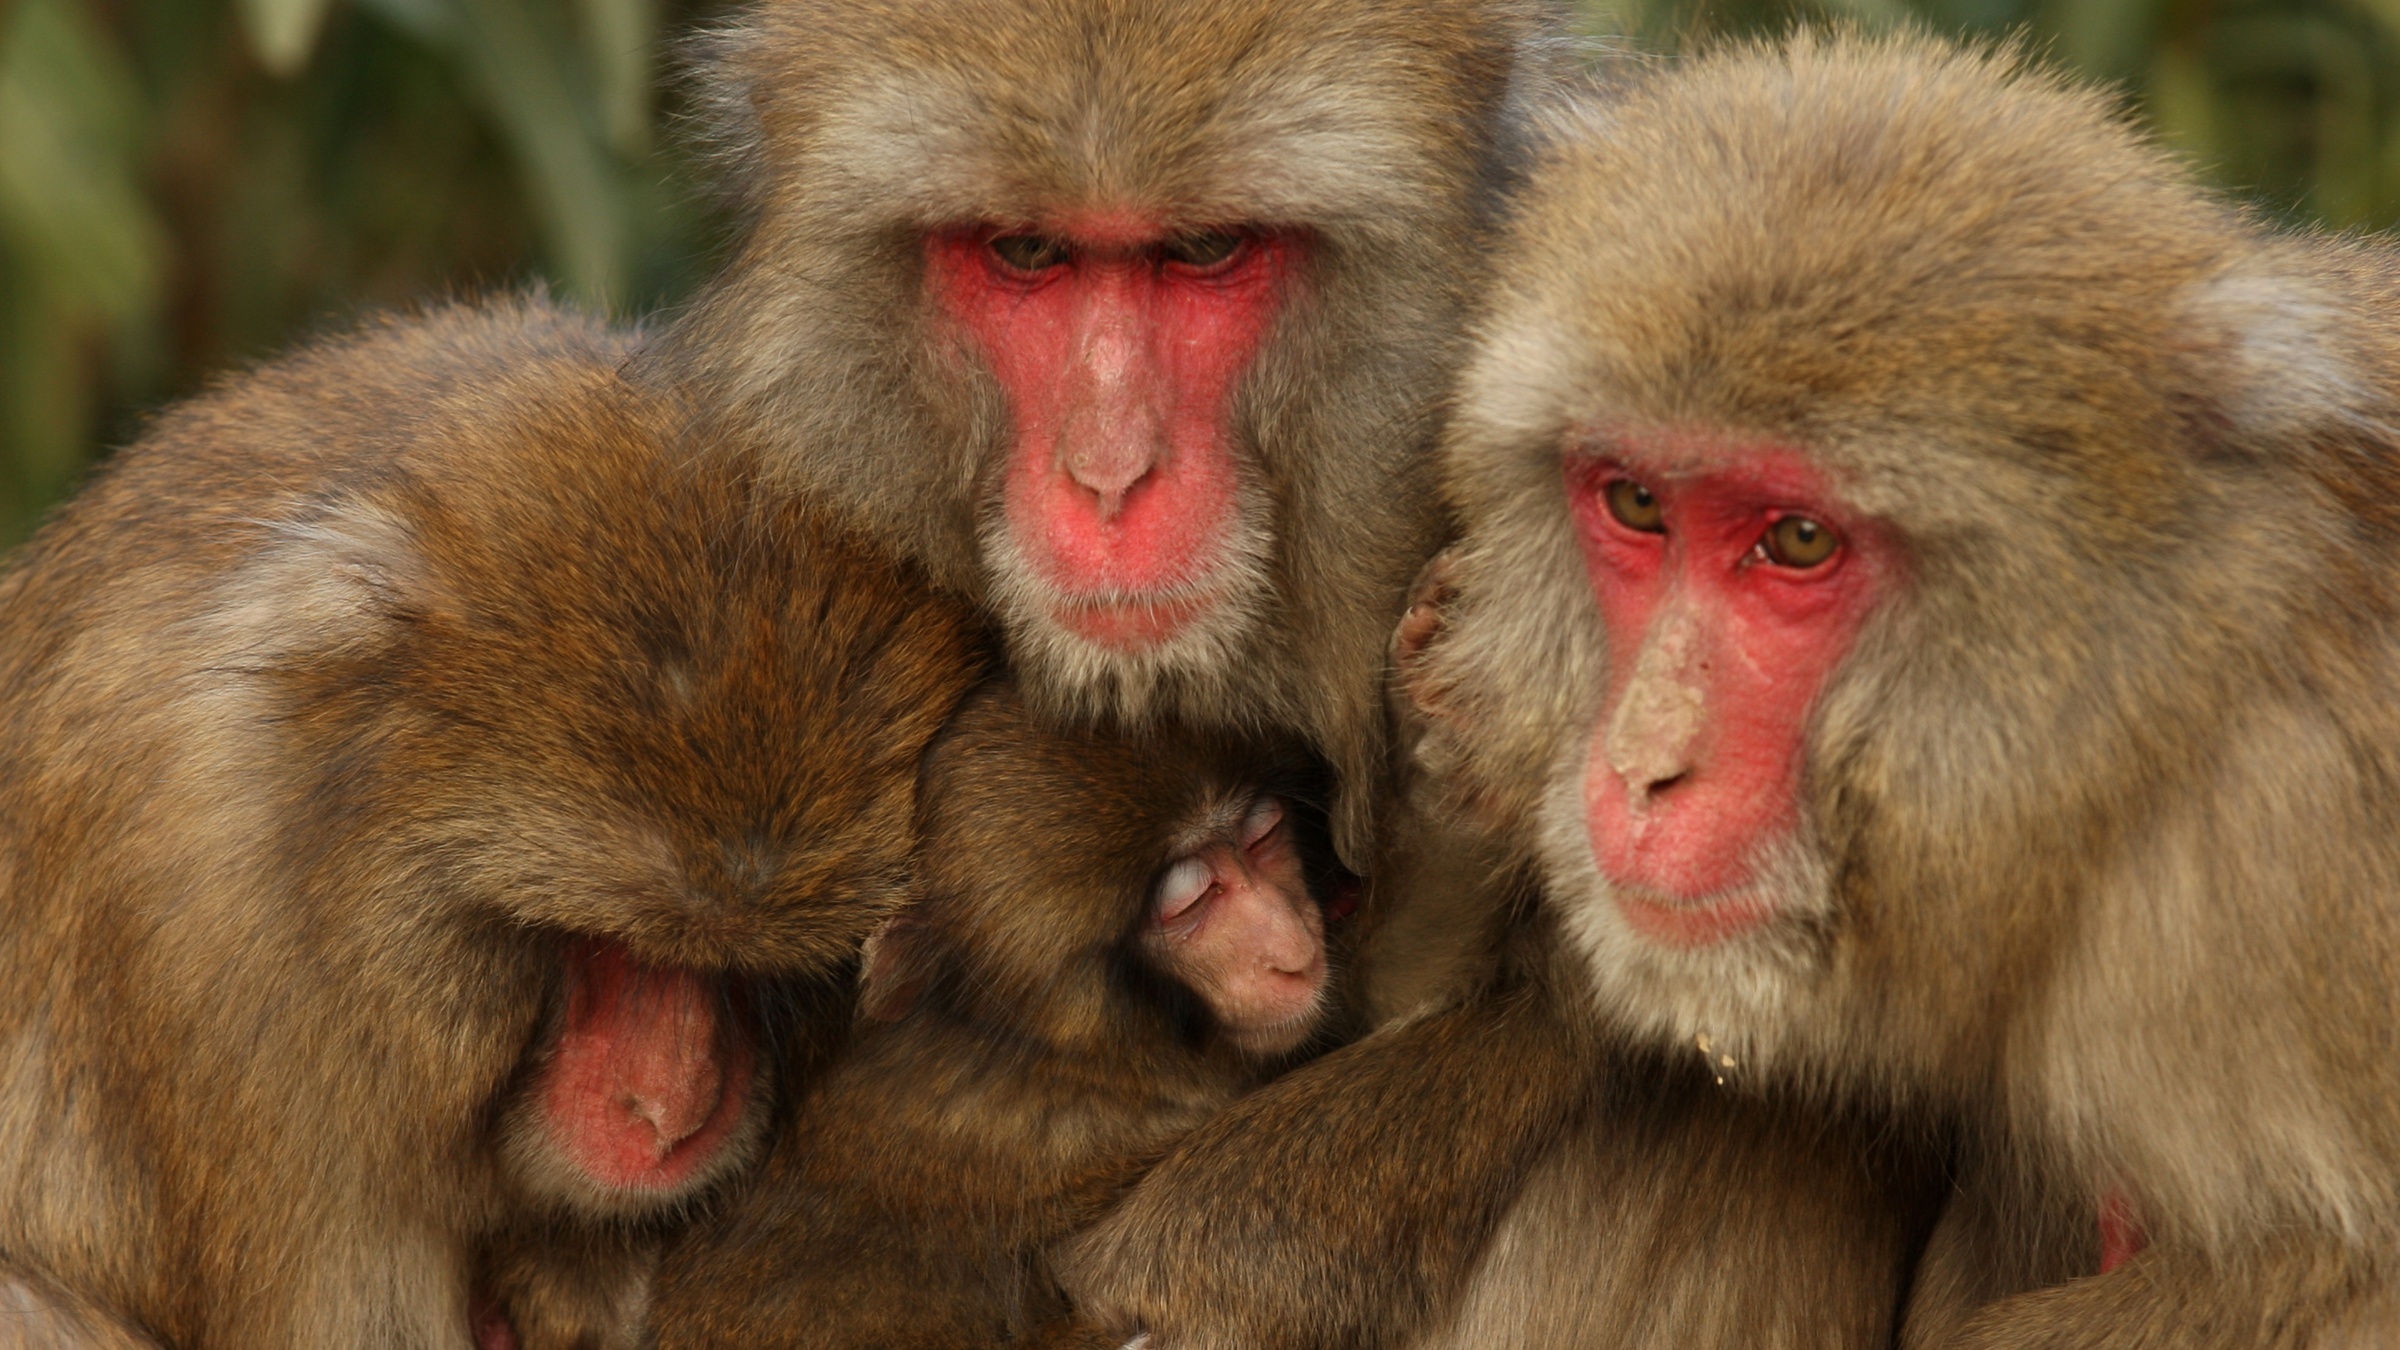 Macaque monkeys huddle together for warmth at Awajishima Monkey Center, Japan